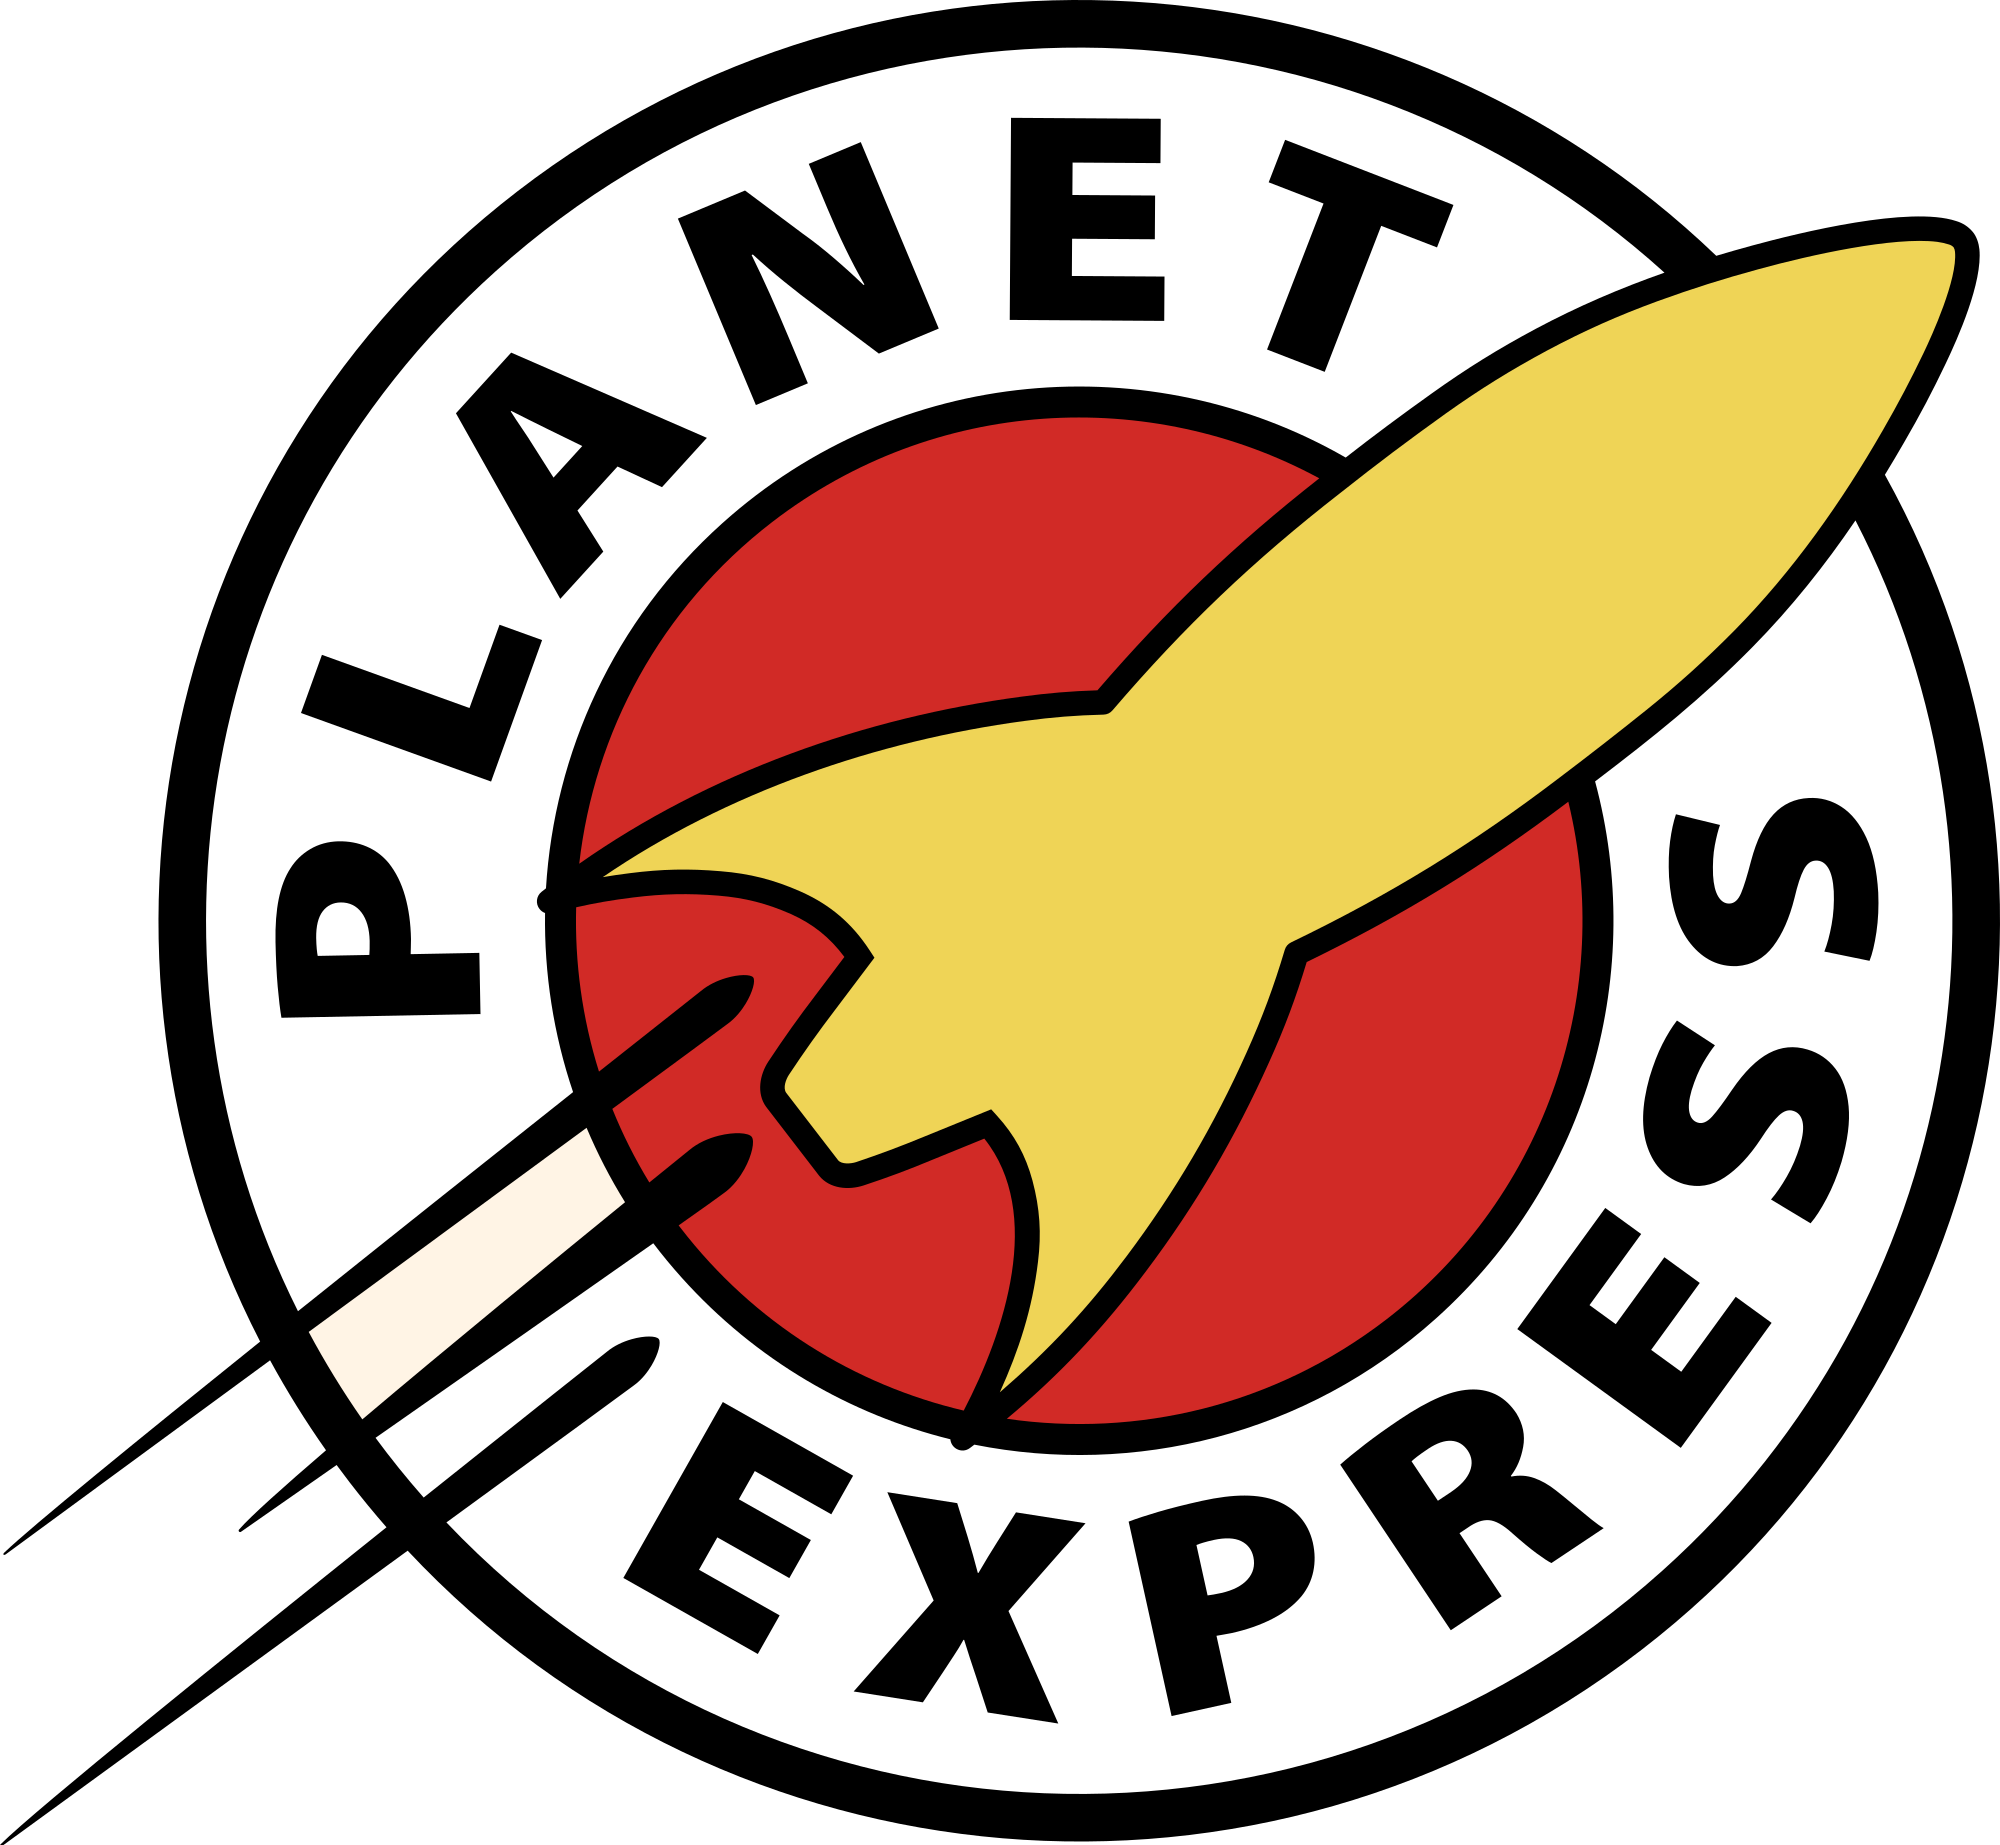 Futurama logo PNG Gambar berkualitas tinggi